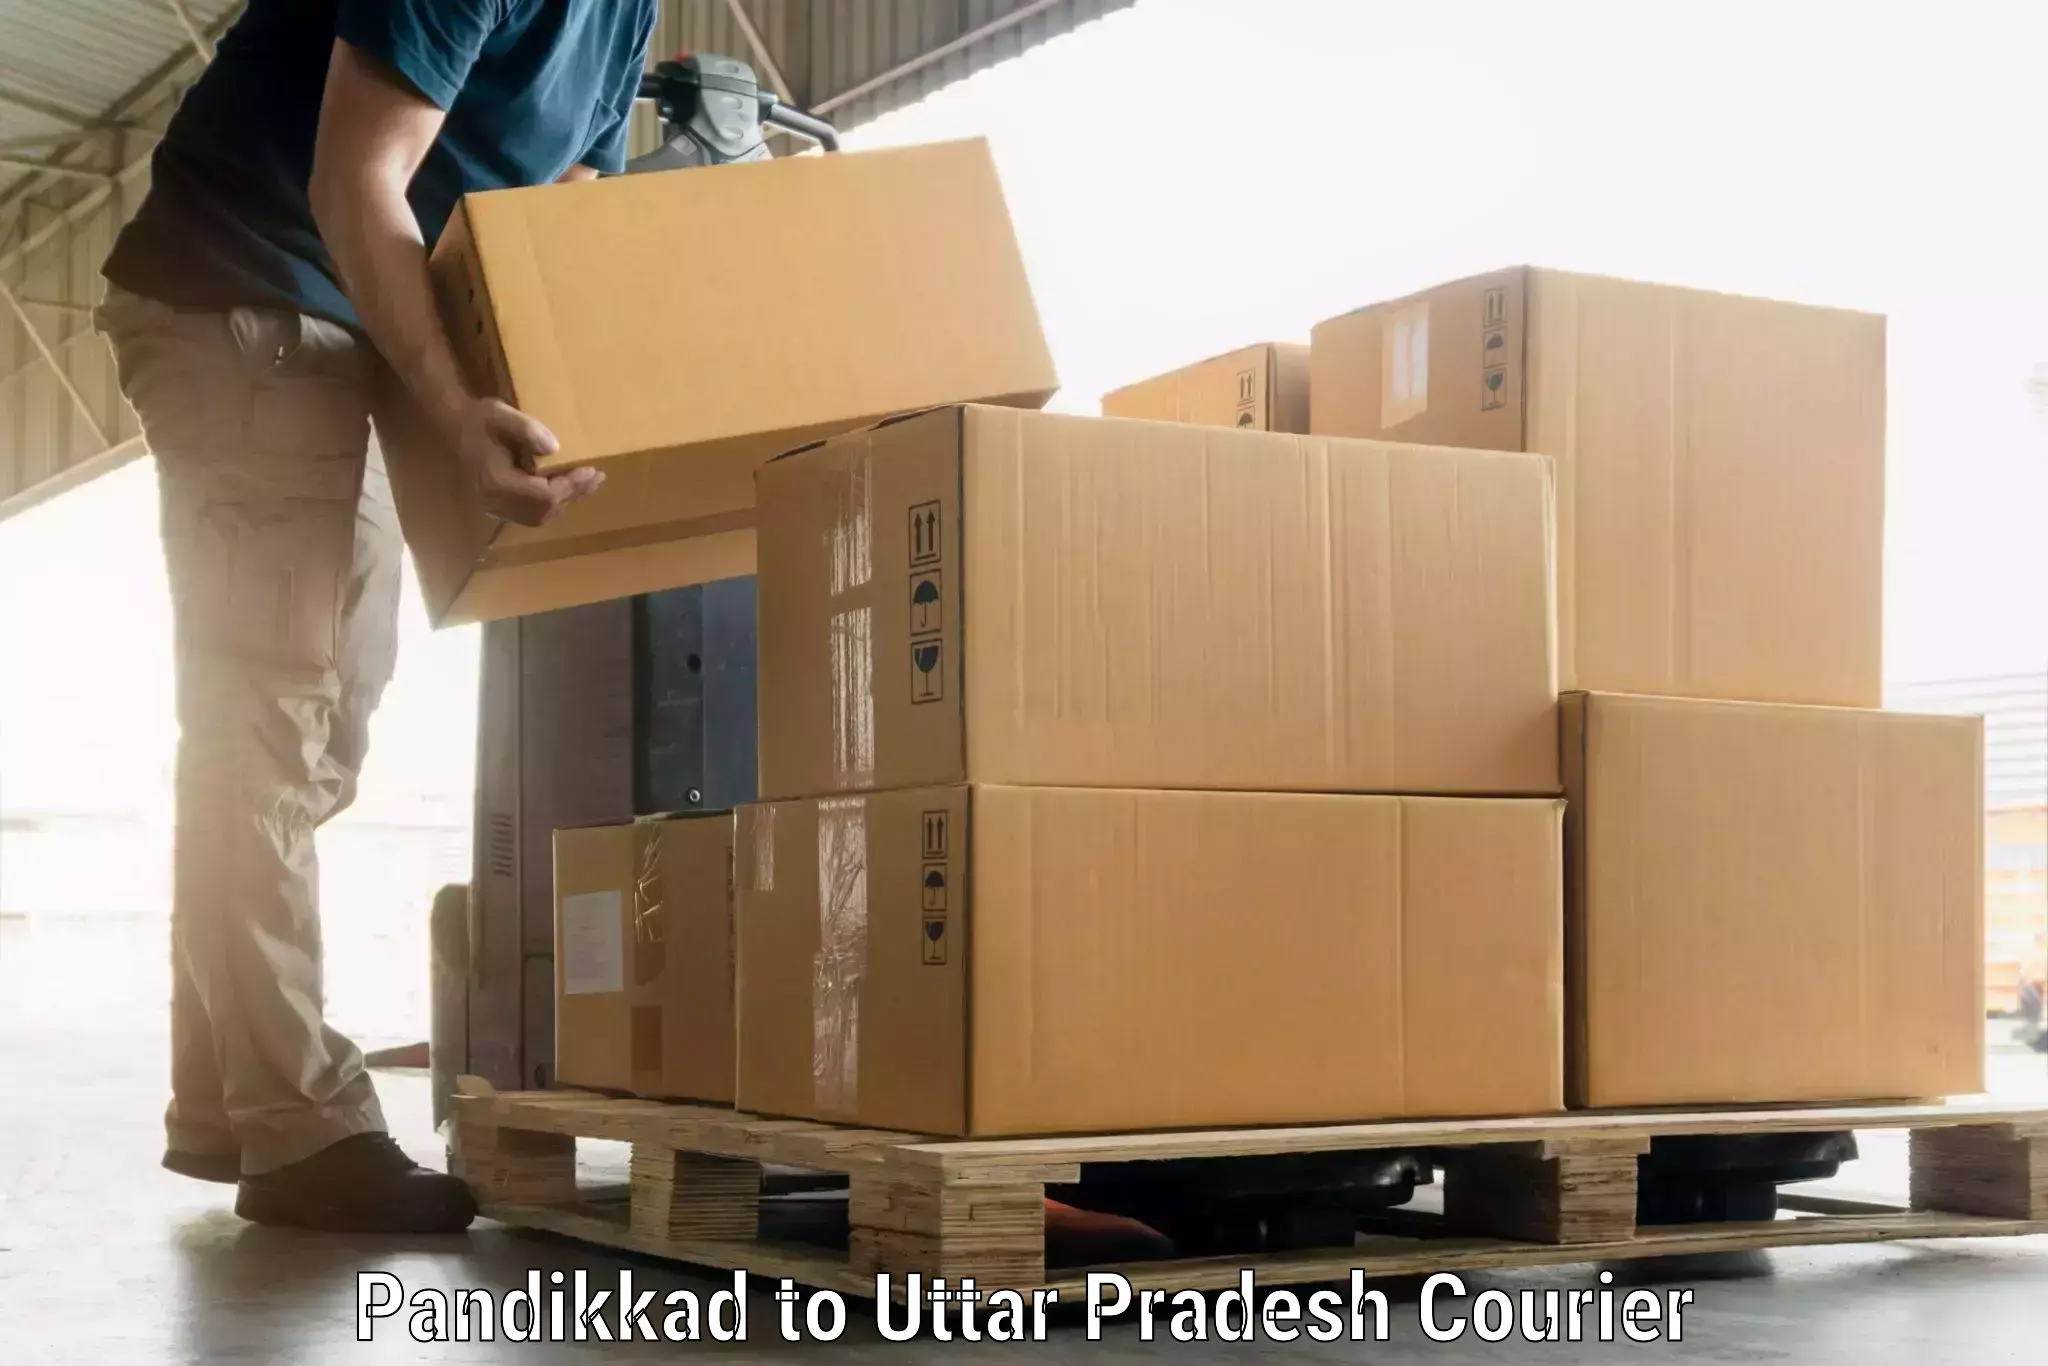 Premium luggage delivery in Pandikkad to Fatehgarh